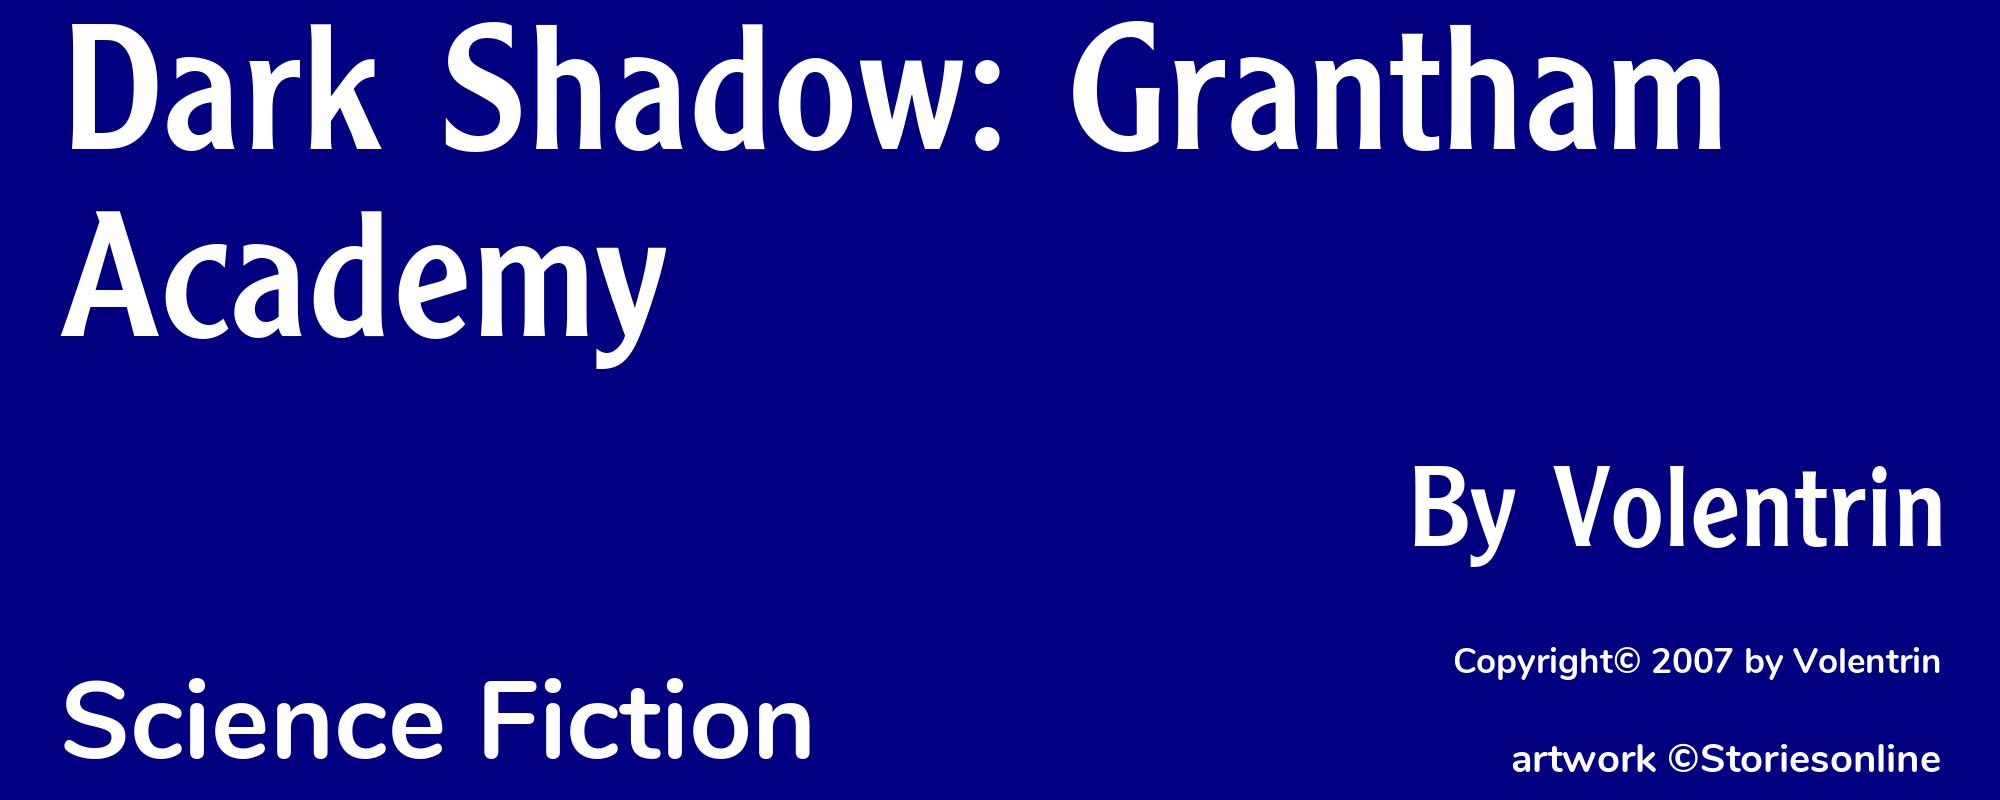 Dark Shadow: Grantham Academy - Cover